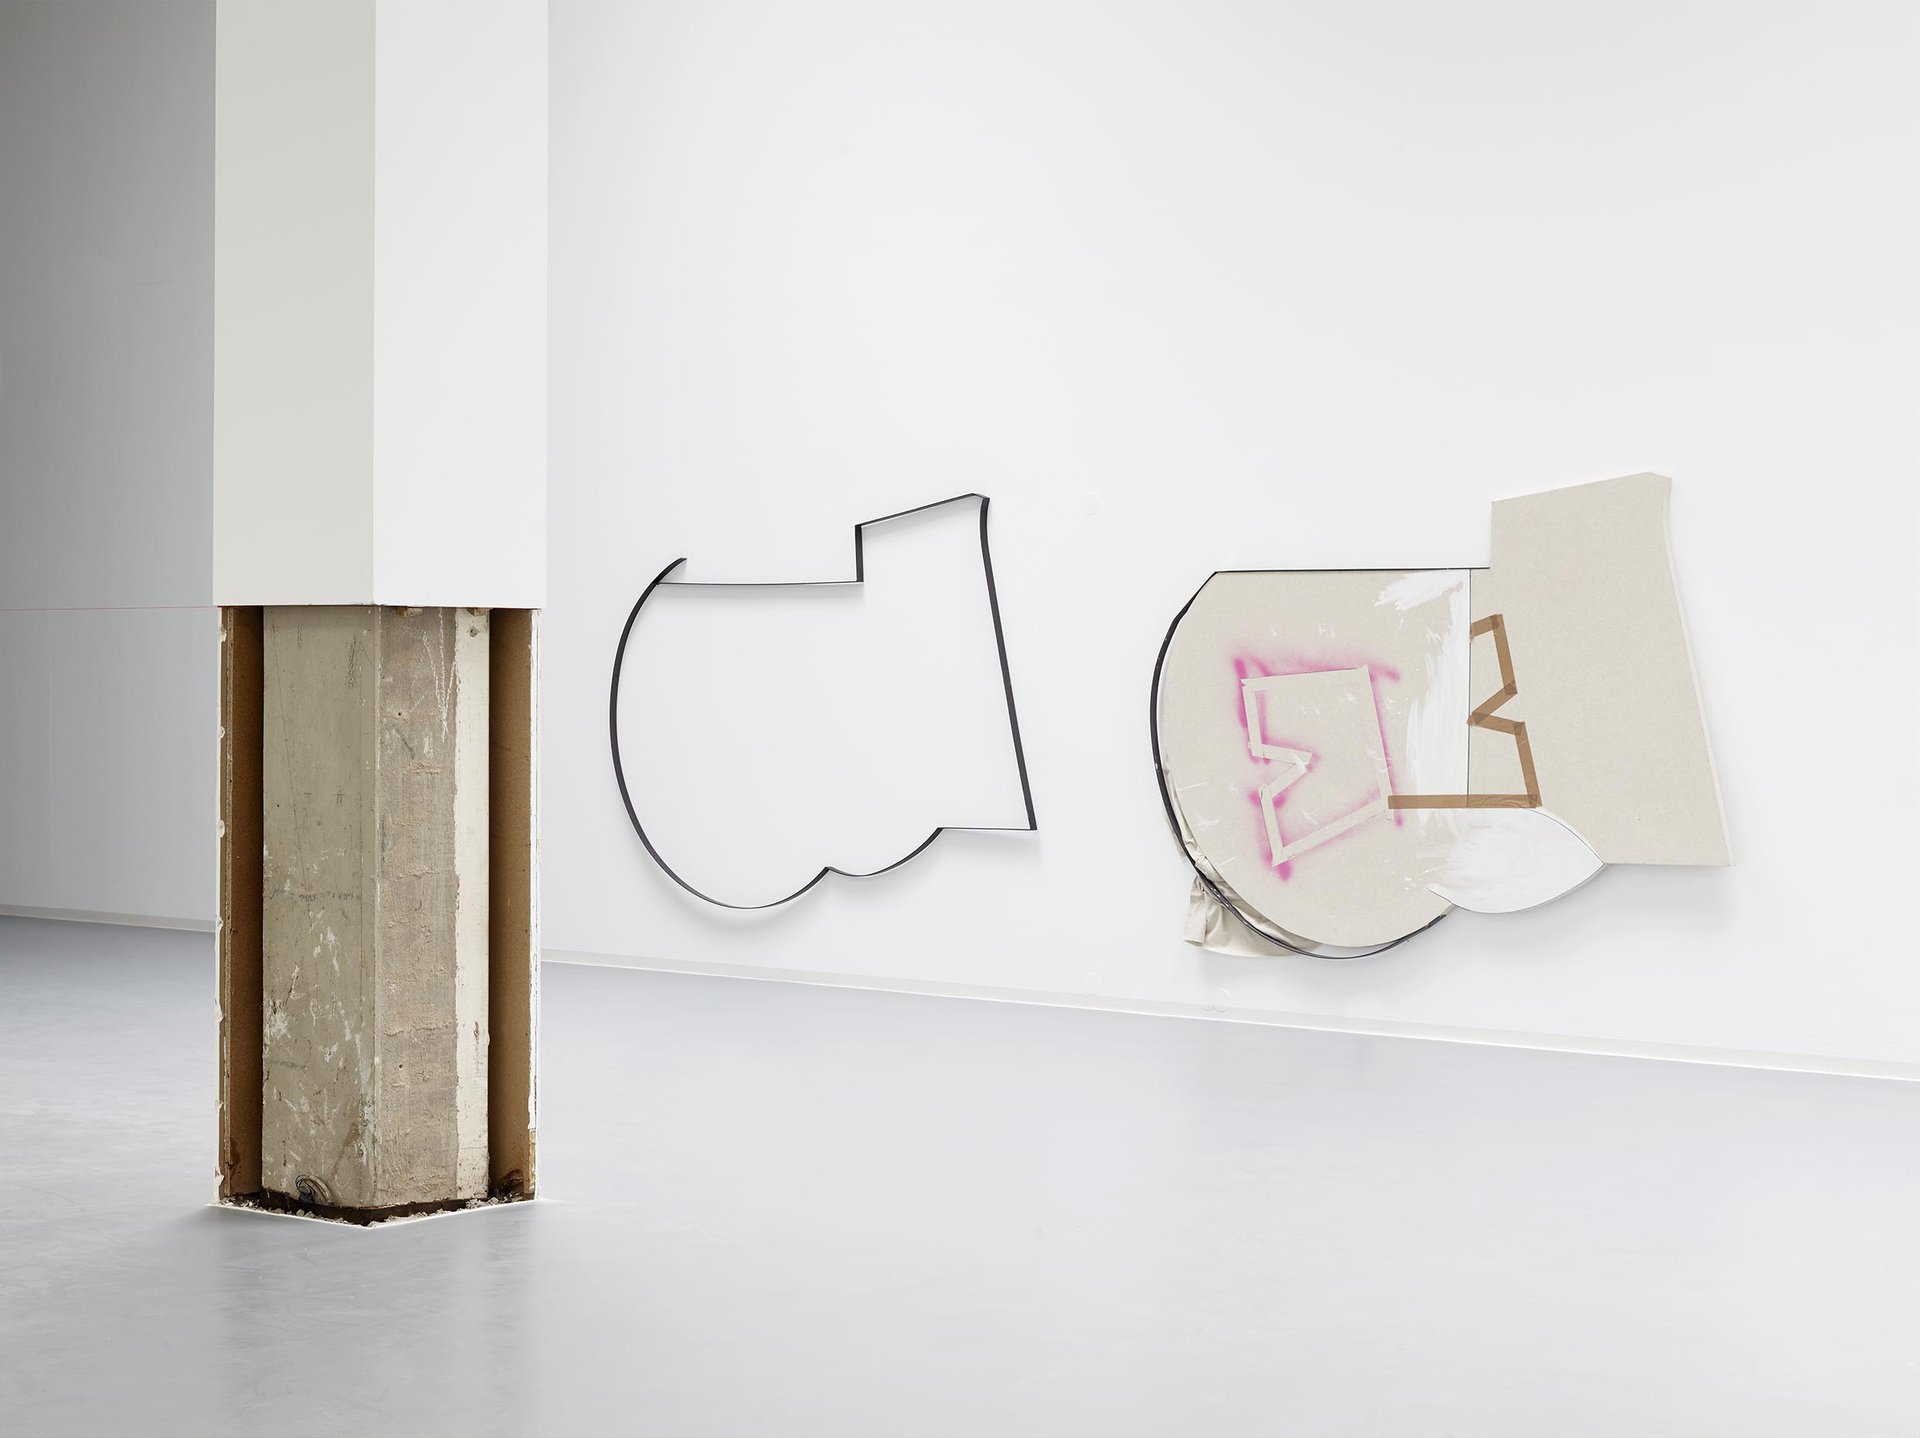 Jonathan Binet, installation view, 2015, Bonner Kunstverein, Courtesy of the artist and Gaudel de Stampa, Paris. Photo: Simon Vogel